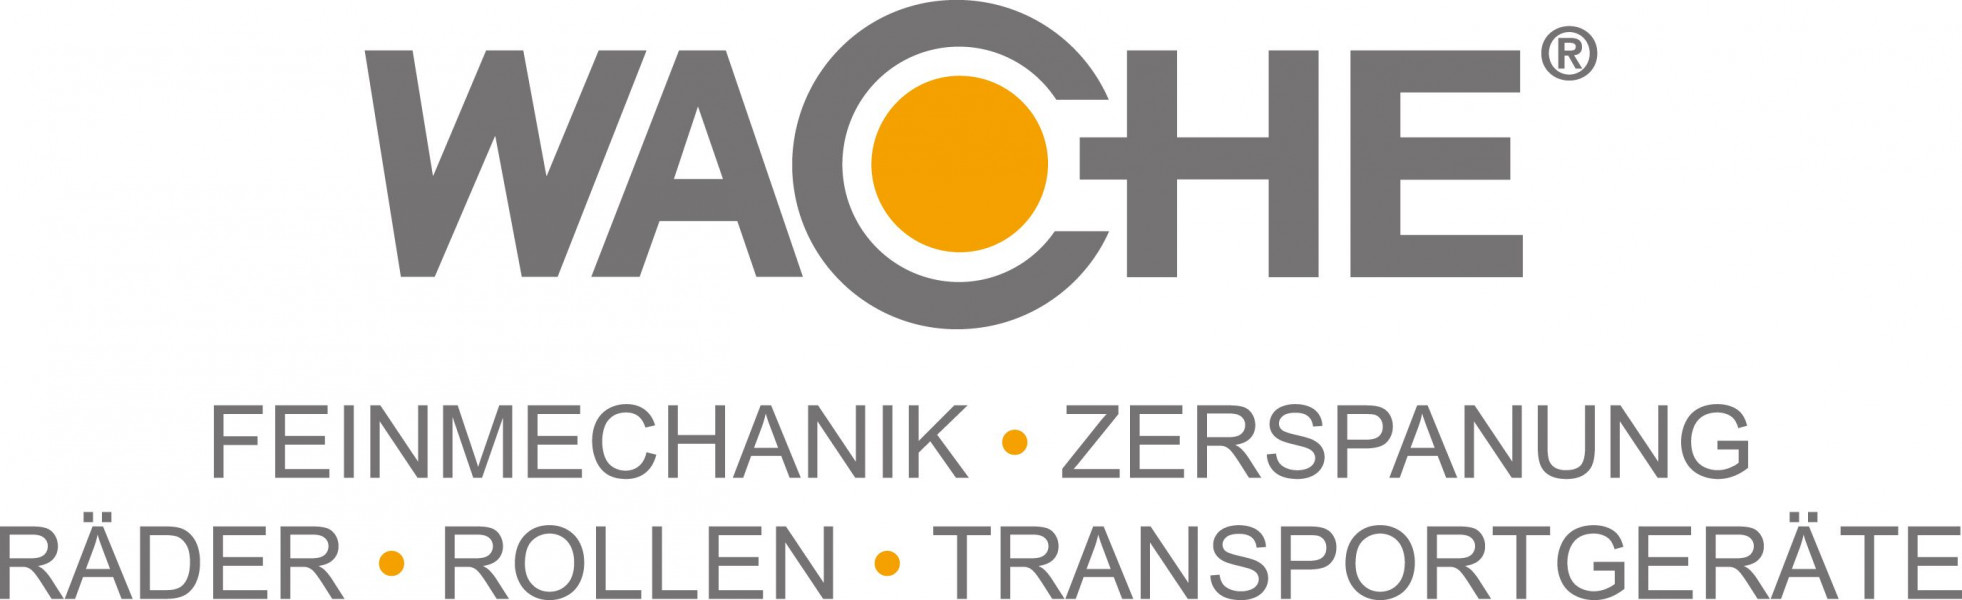 Wache GmbH